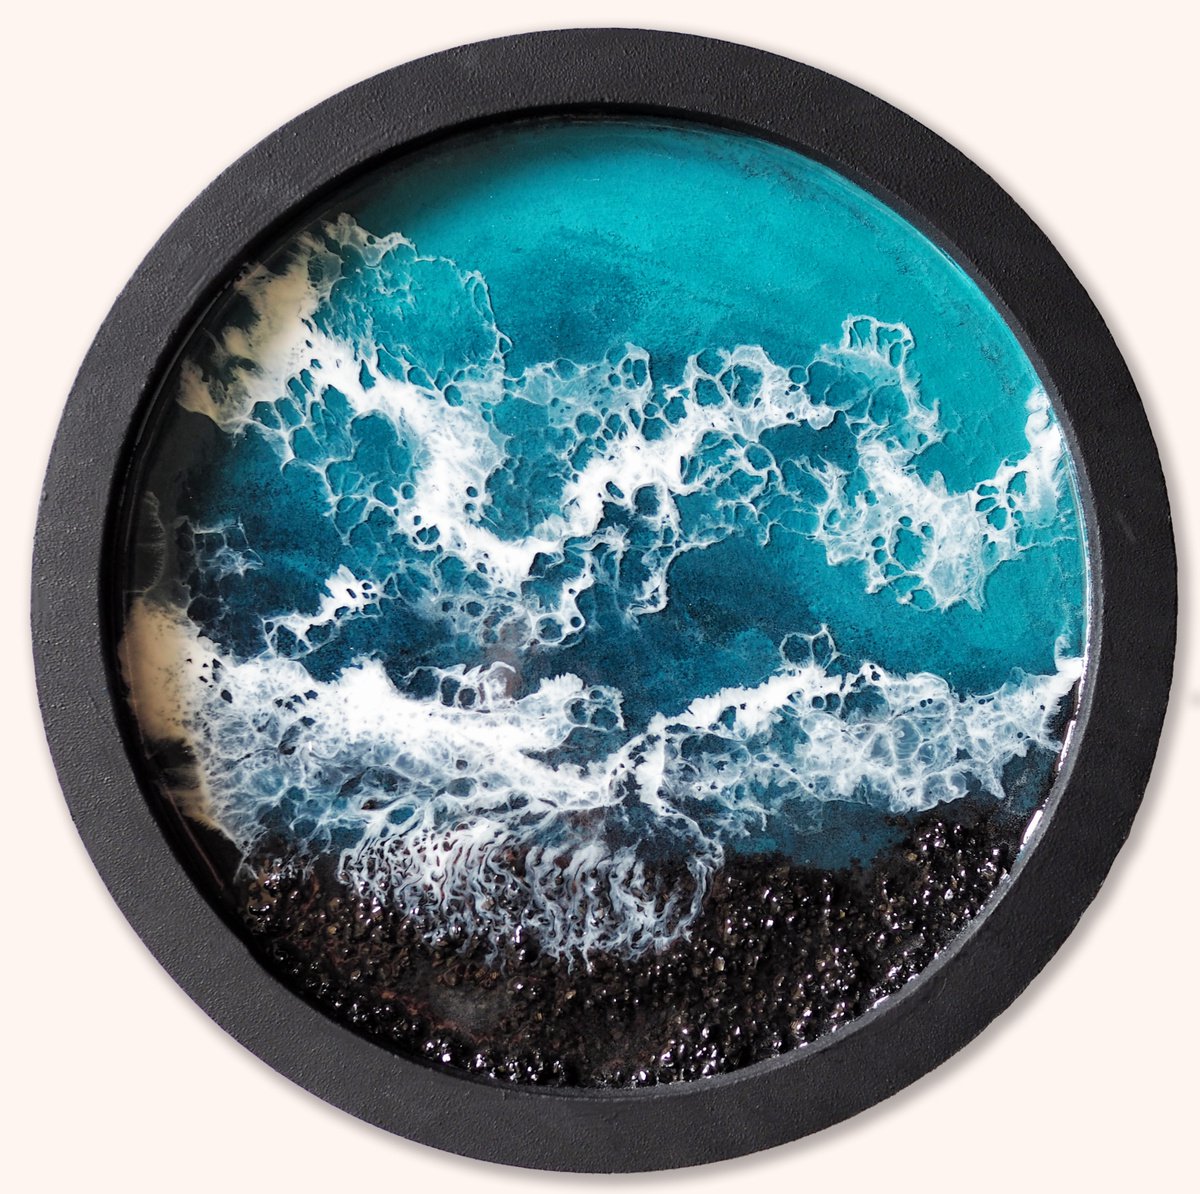 Round window overlooking the sea in a black frame by Delnara El